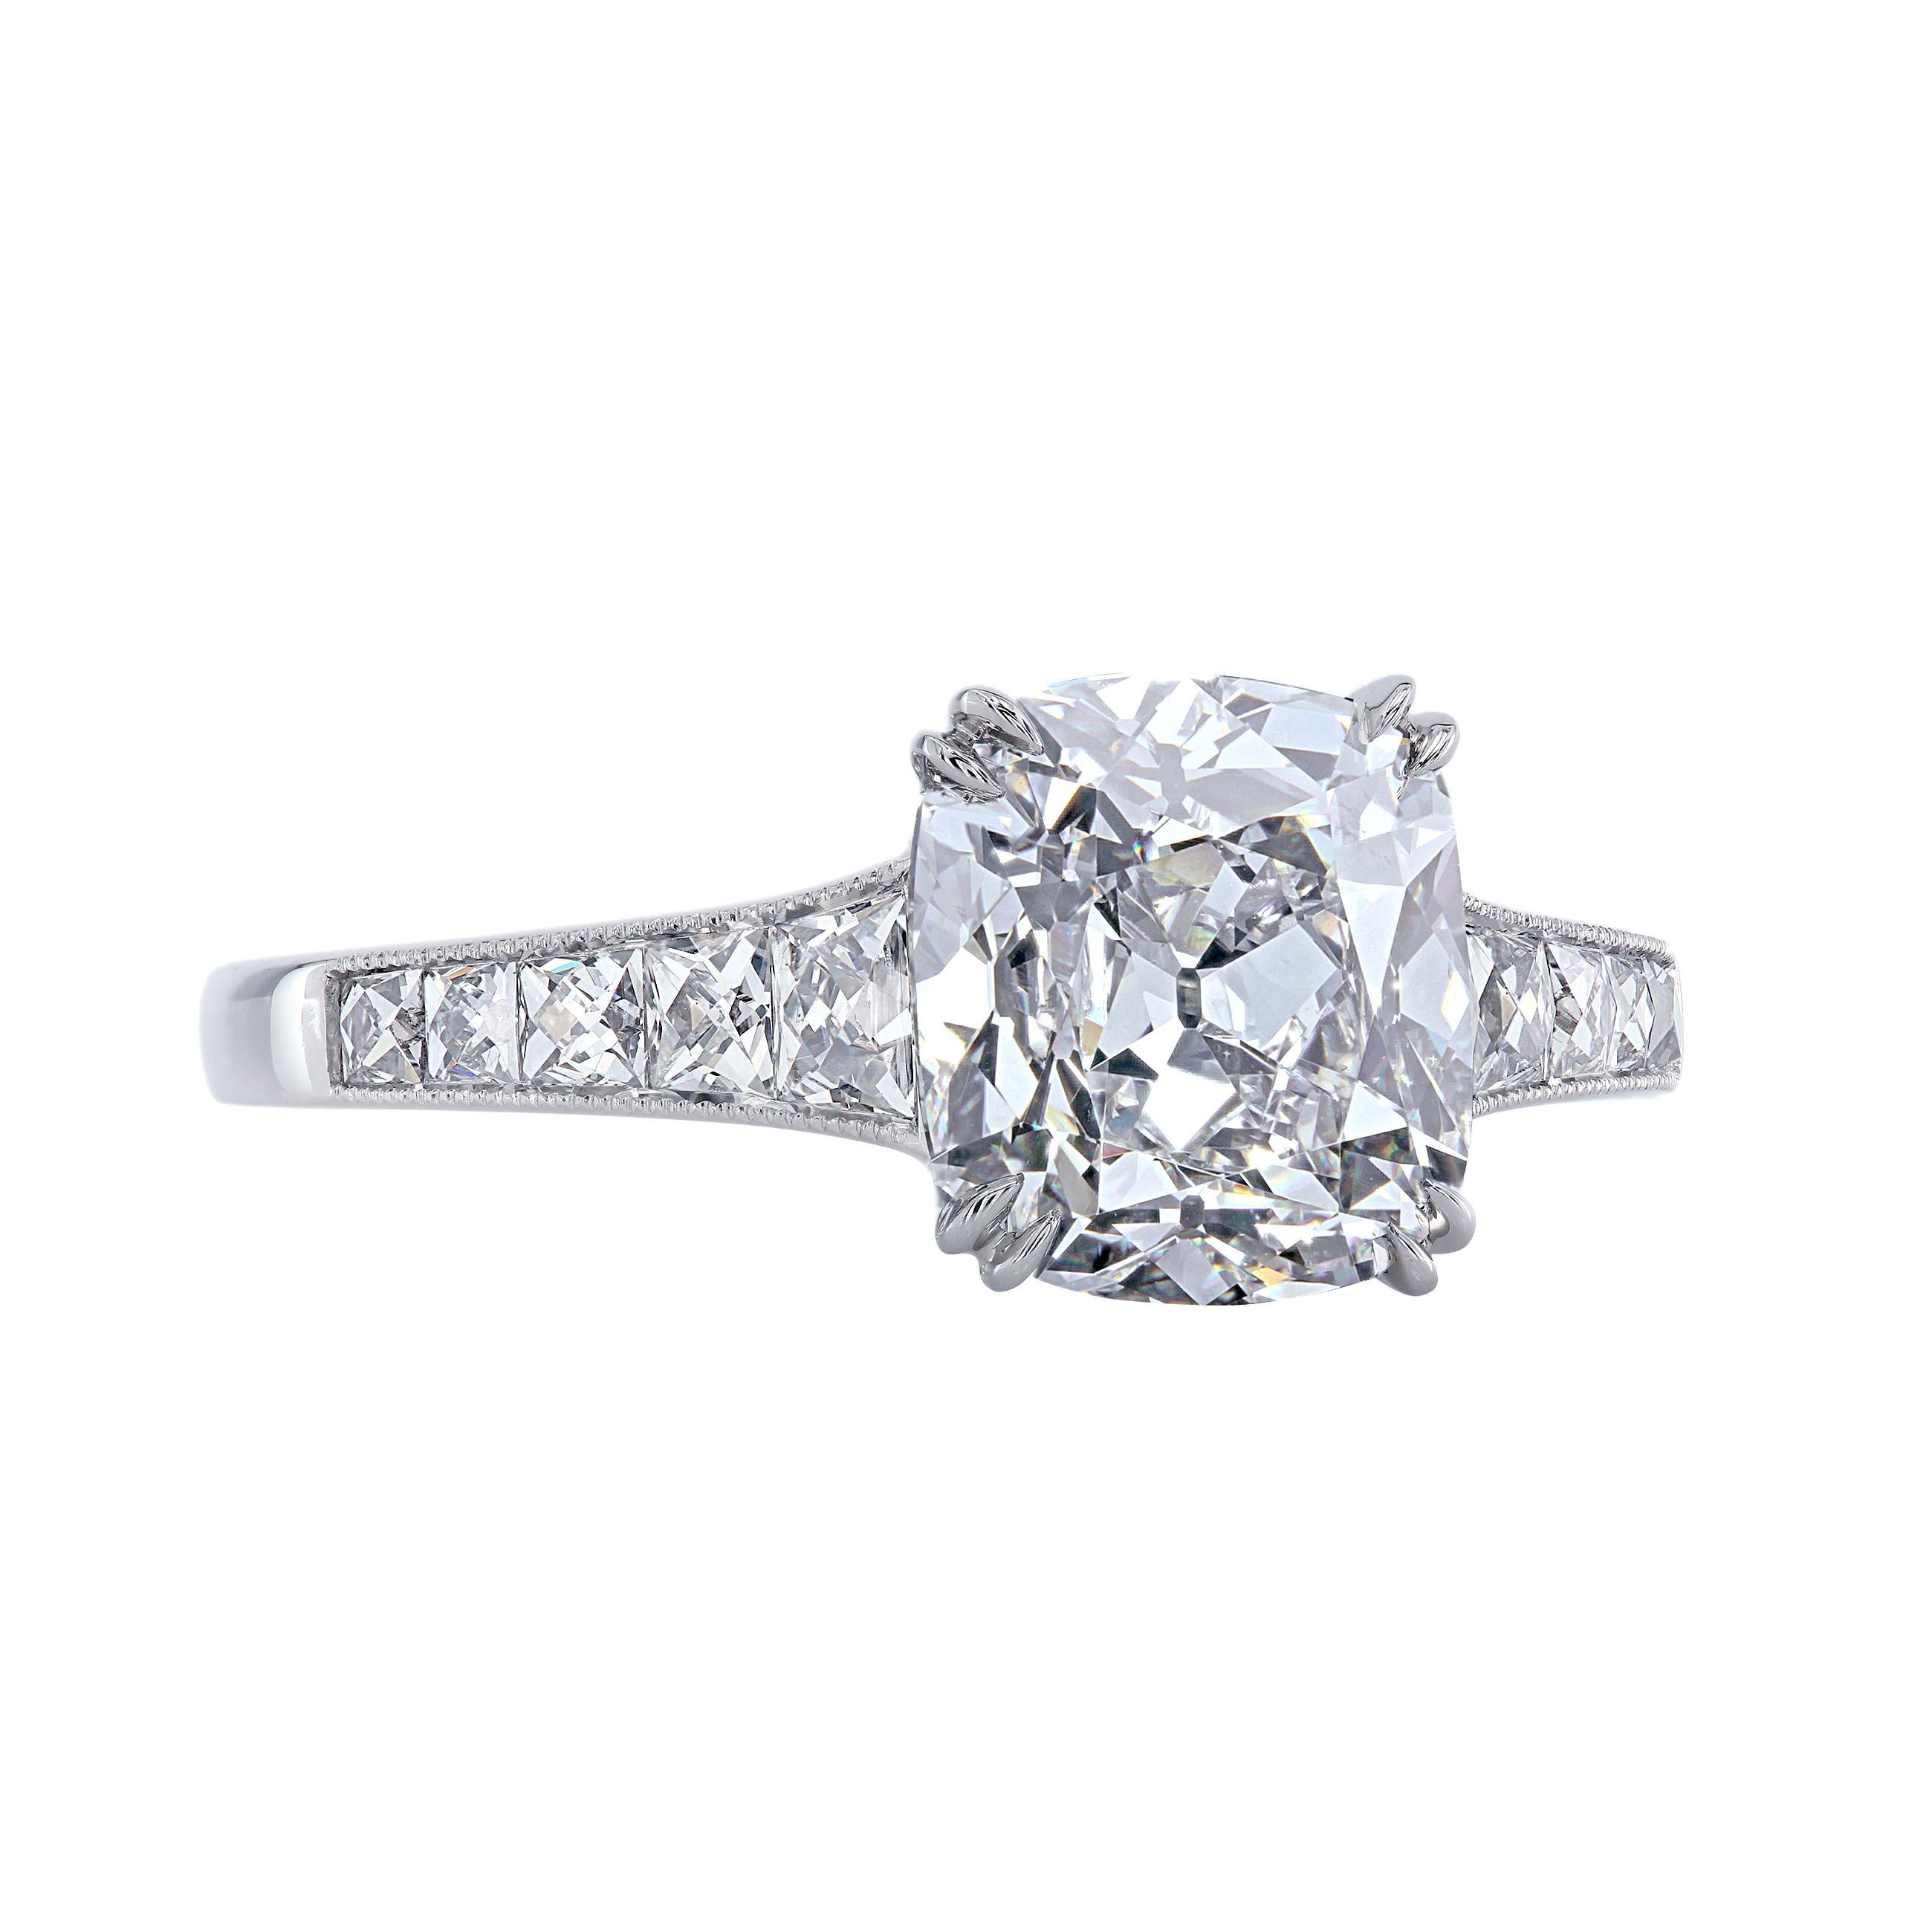 Leon Mege 6 Carat Cushion Diamond Bespoke Engagement Solitaire Platinum Ring